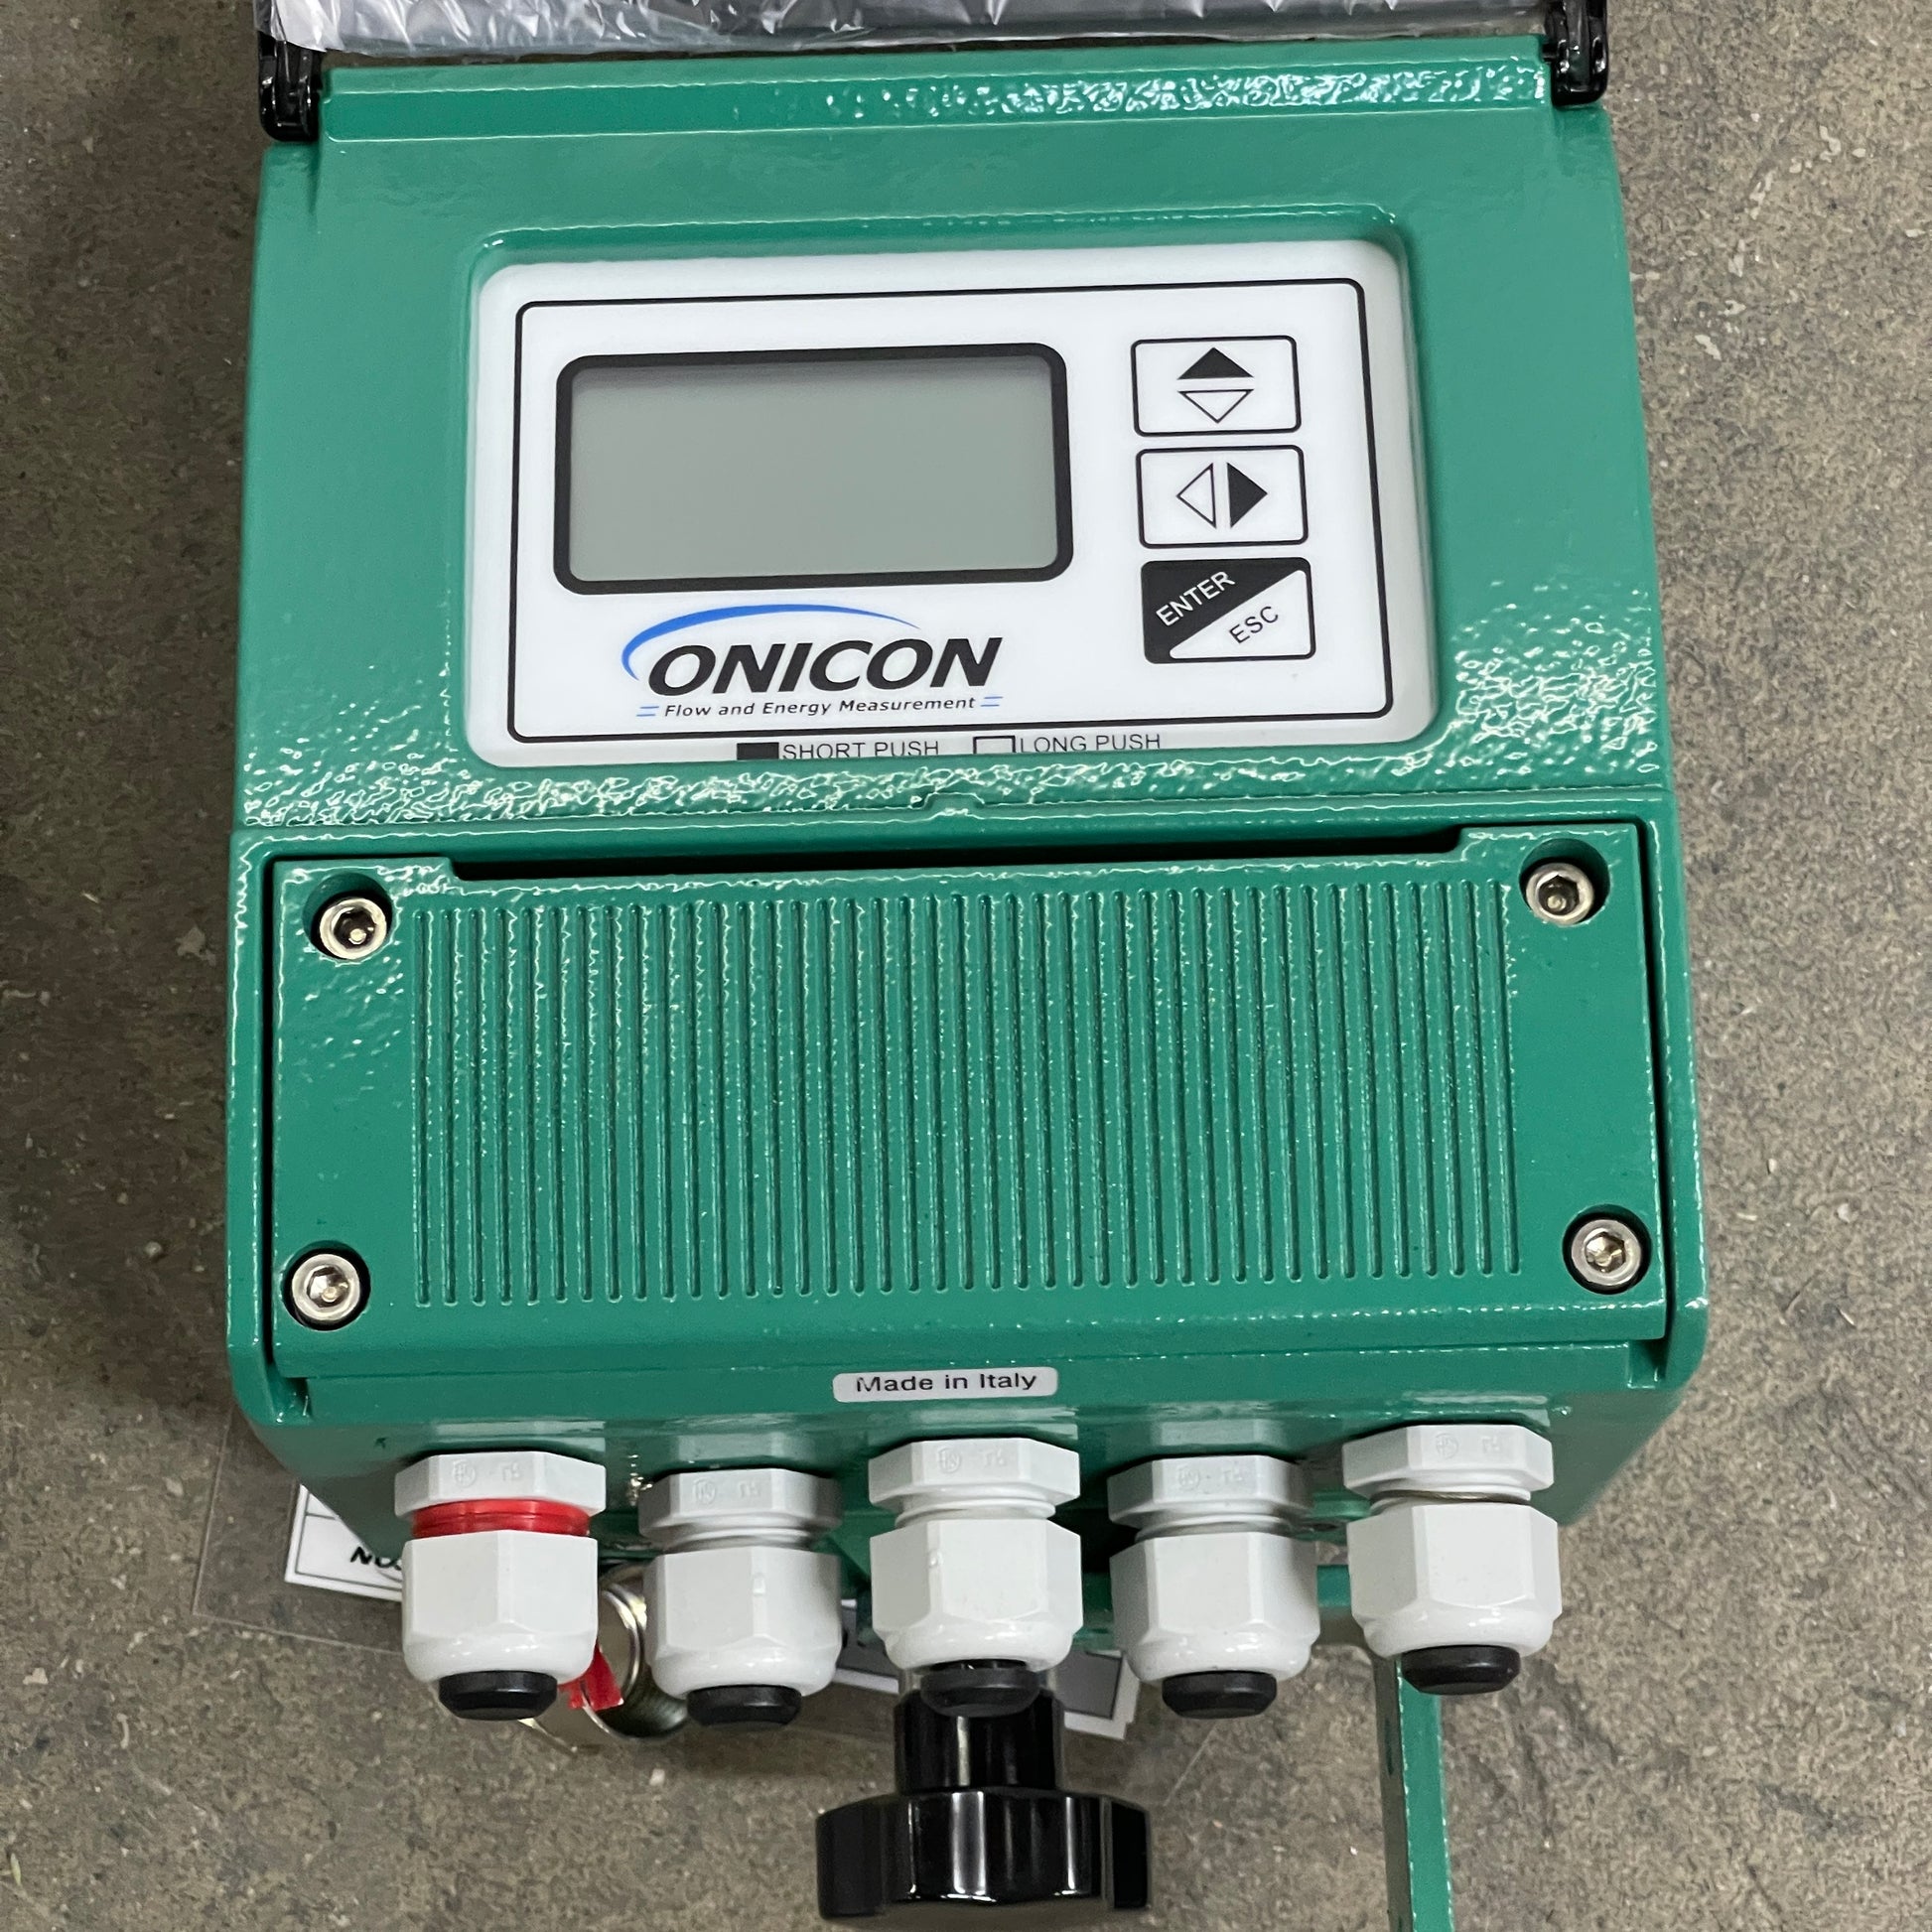 ONICON F-1200 / F-1200-10-E5-1221 Flow & Energy Measurement Sr. NO